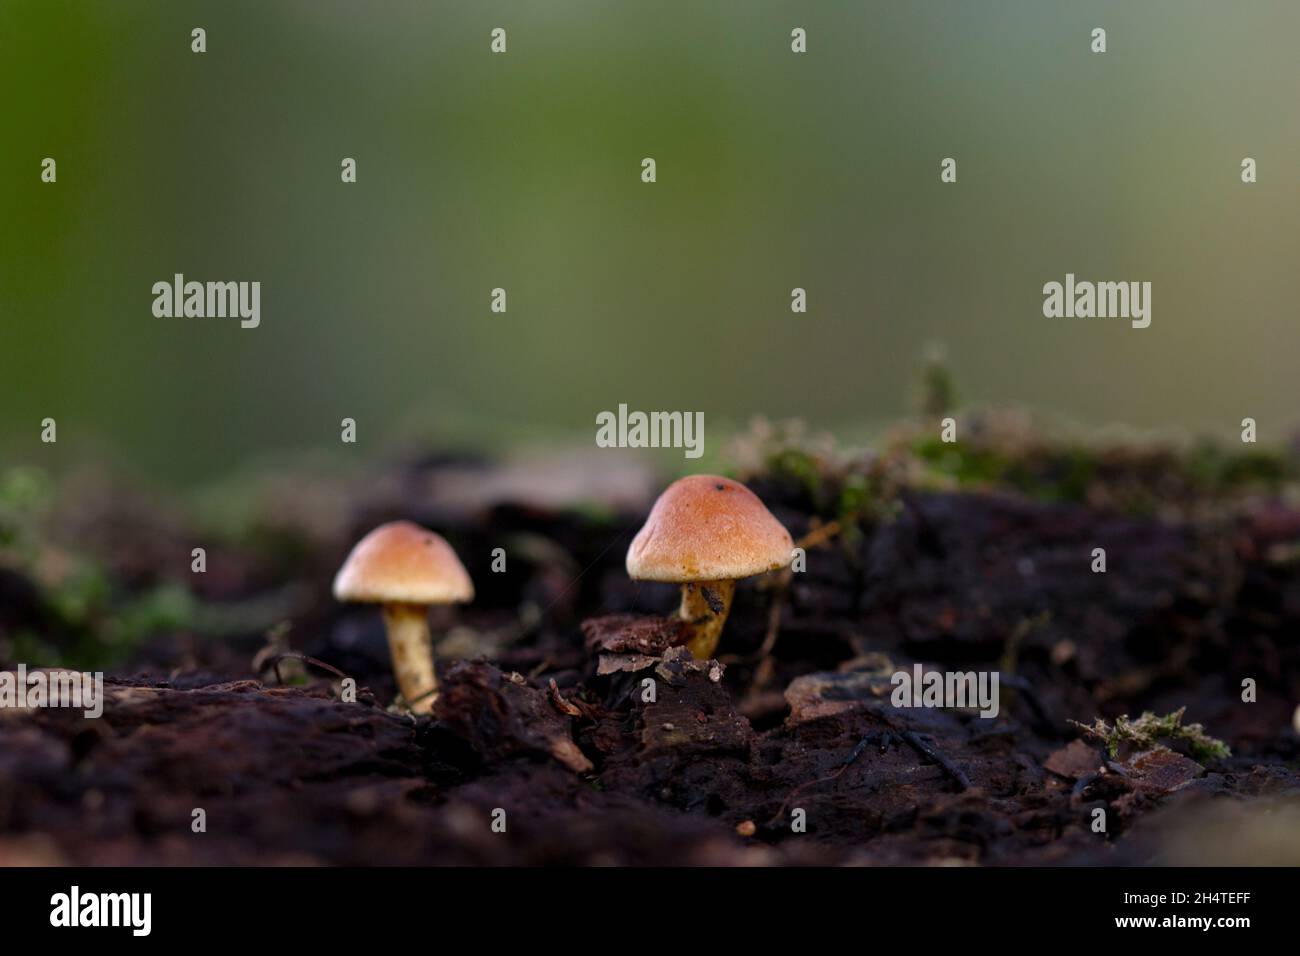 Fungi In An Autumn Environment Stock Photo